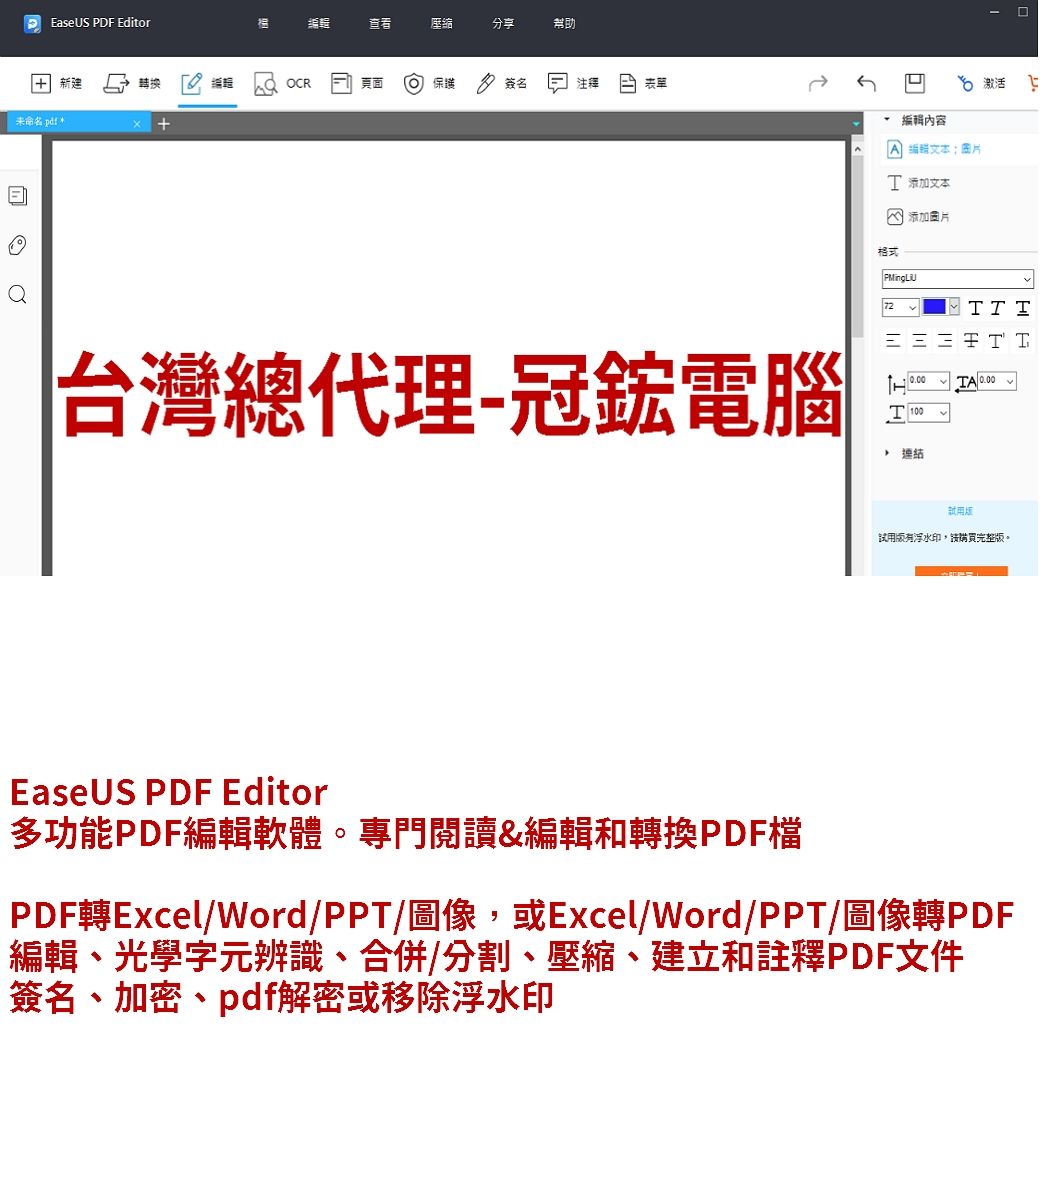 EaseUS PDF Editor查看壓縮分享幫助新建轉換 頁面 保護 簽名注釋  表單 + 內容 激活 :图片 添加文本台灣總代理-冠鋐電腦格式添加圖片72 T T0.00TA 0.00T 100連結試用版有浮水印,請購買完整版。EaseUS PDF Editor多功能PDF編輯軟體。專門閱讀&編輯和轉換PDF檔PDF轉Excel/Word/PPT/圖像,或Excel/Word/PPT/圖像轉PDF編輯、光學字元辨識、合併、分割、壓縮、建立和註釋PDF文件簽名、加密、pdf解密或移除浮水印